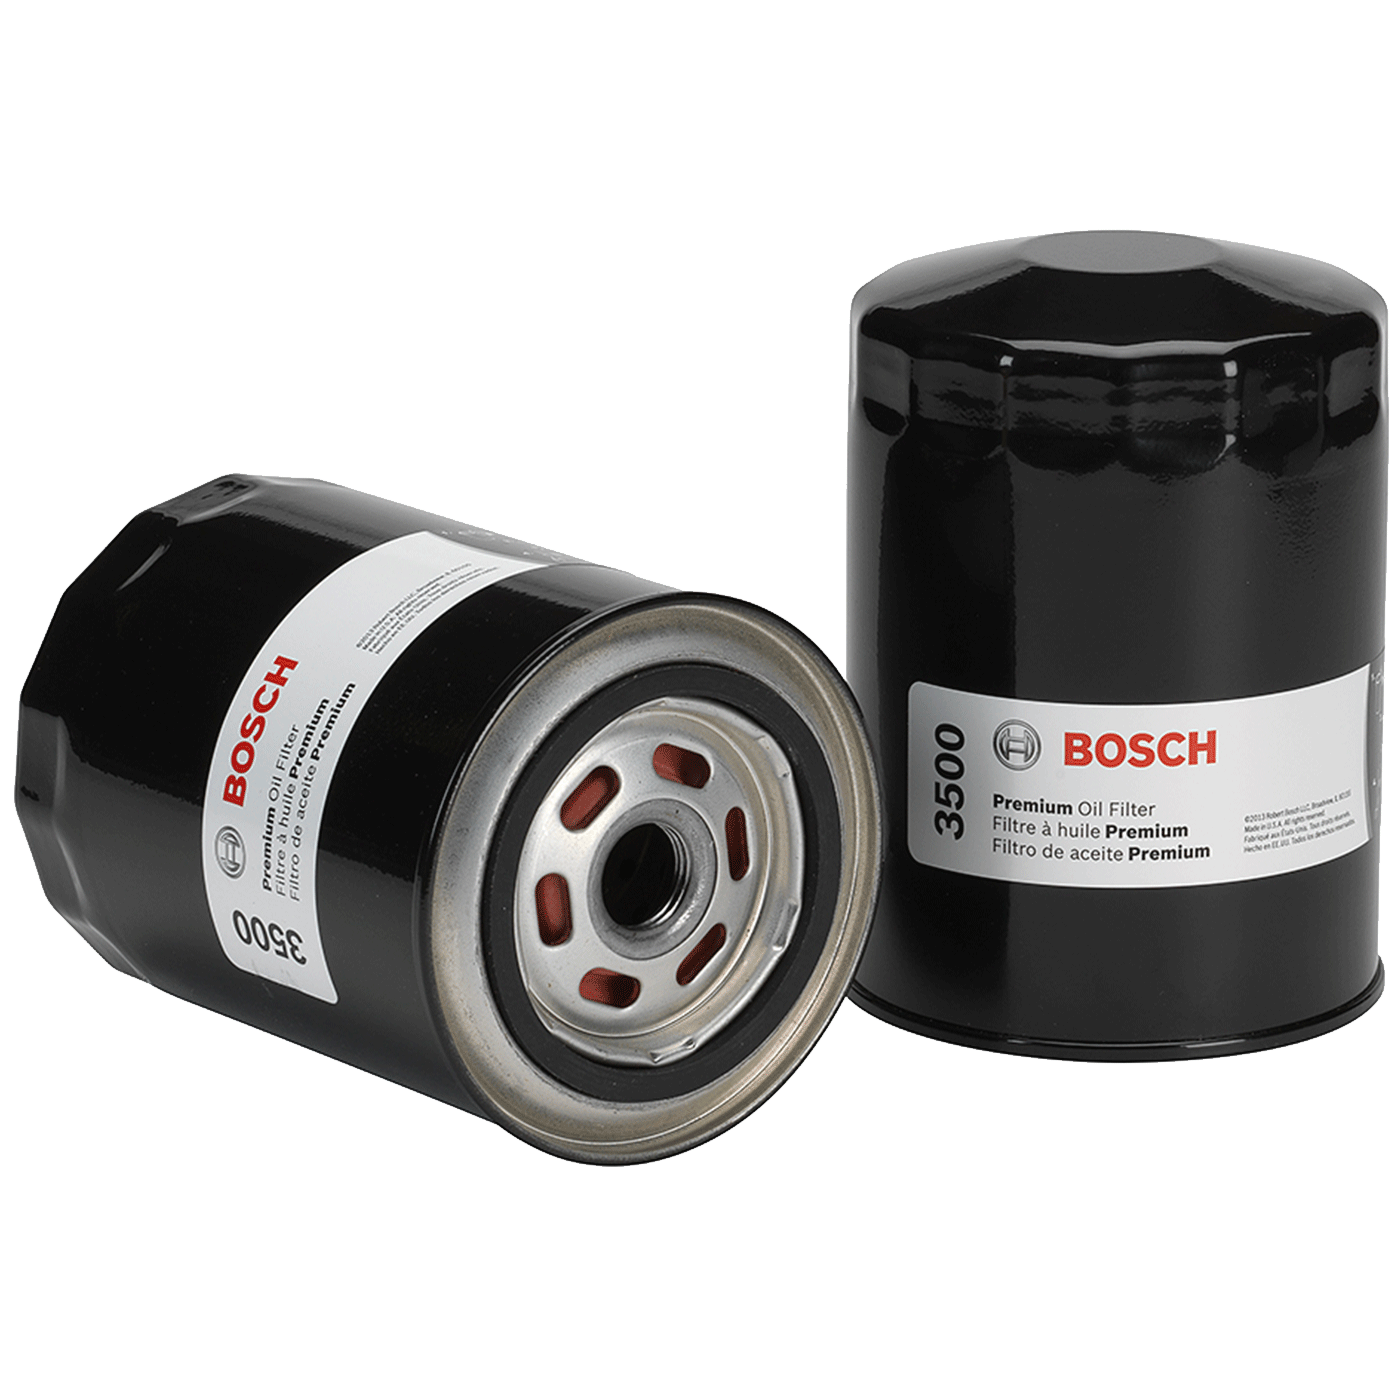 Premium Oil Filter | Bosch Auto Parts